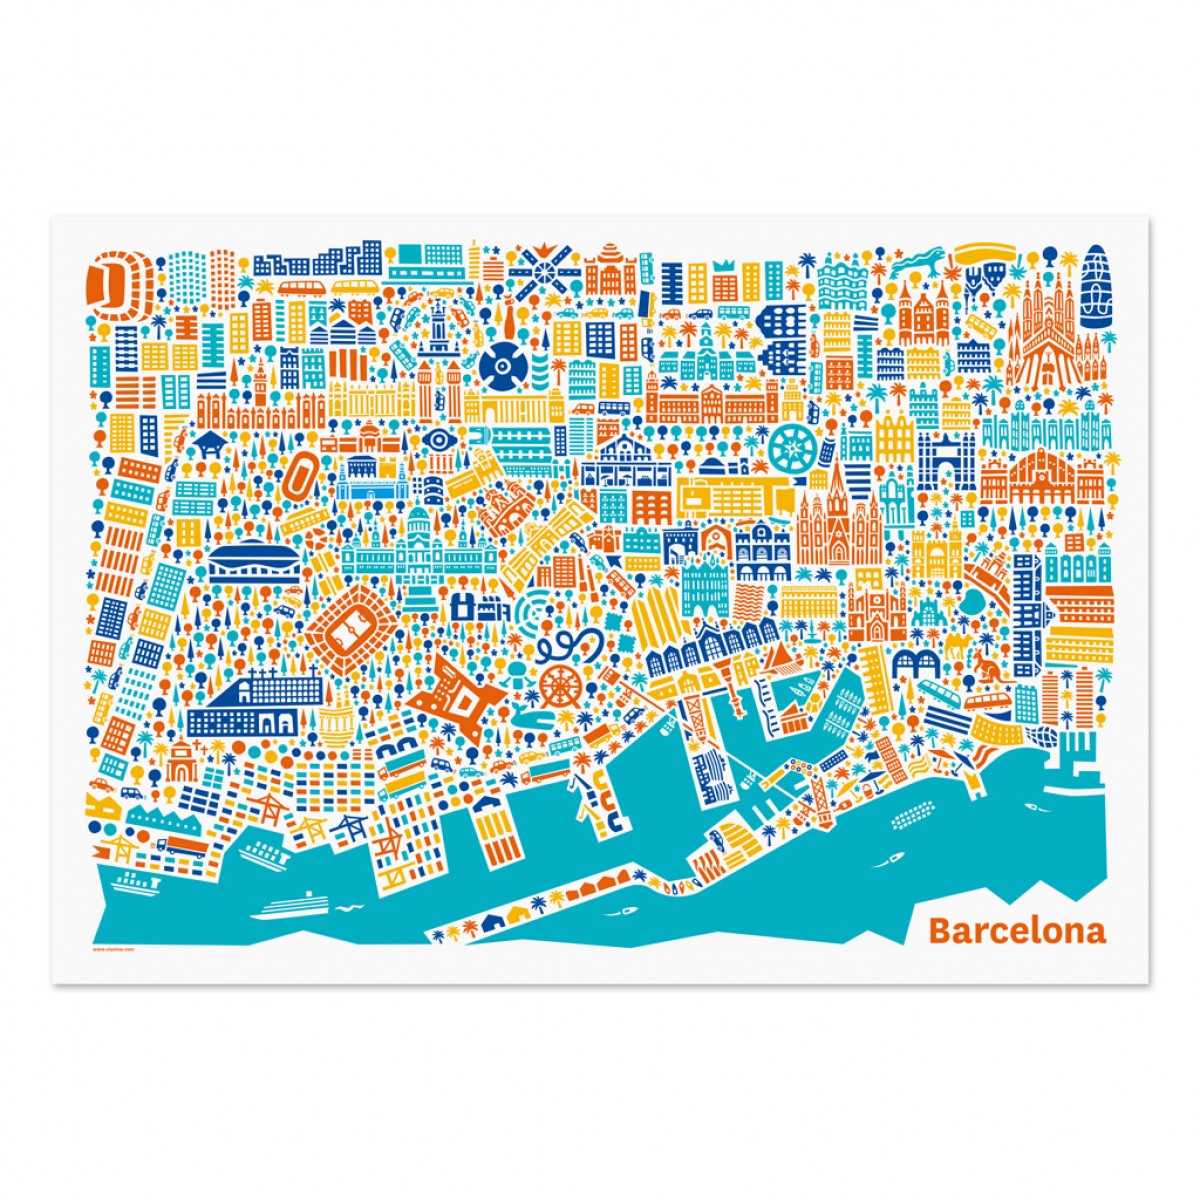 Vianina Barcelona Poster 100 x 70